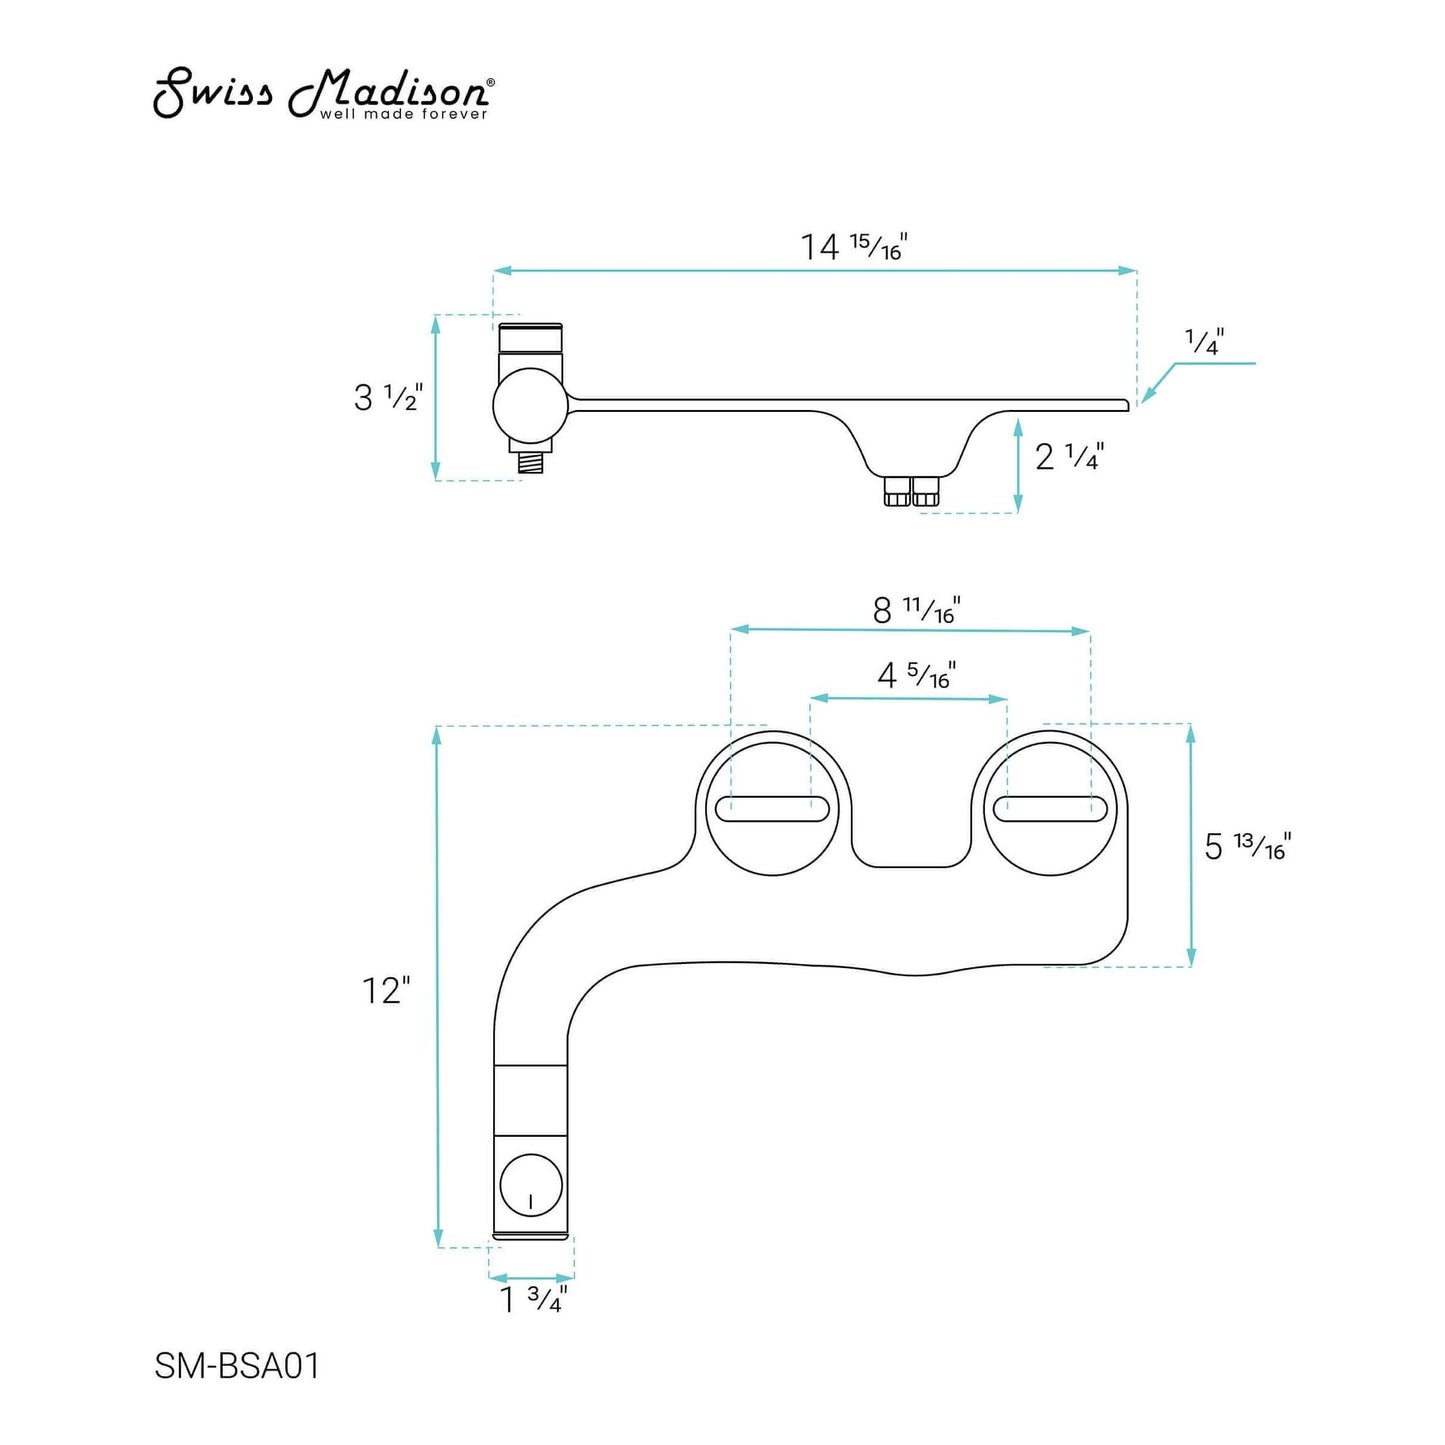 Aqua Non-Electric Bidet Toilet Attachment - diagram with specifications